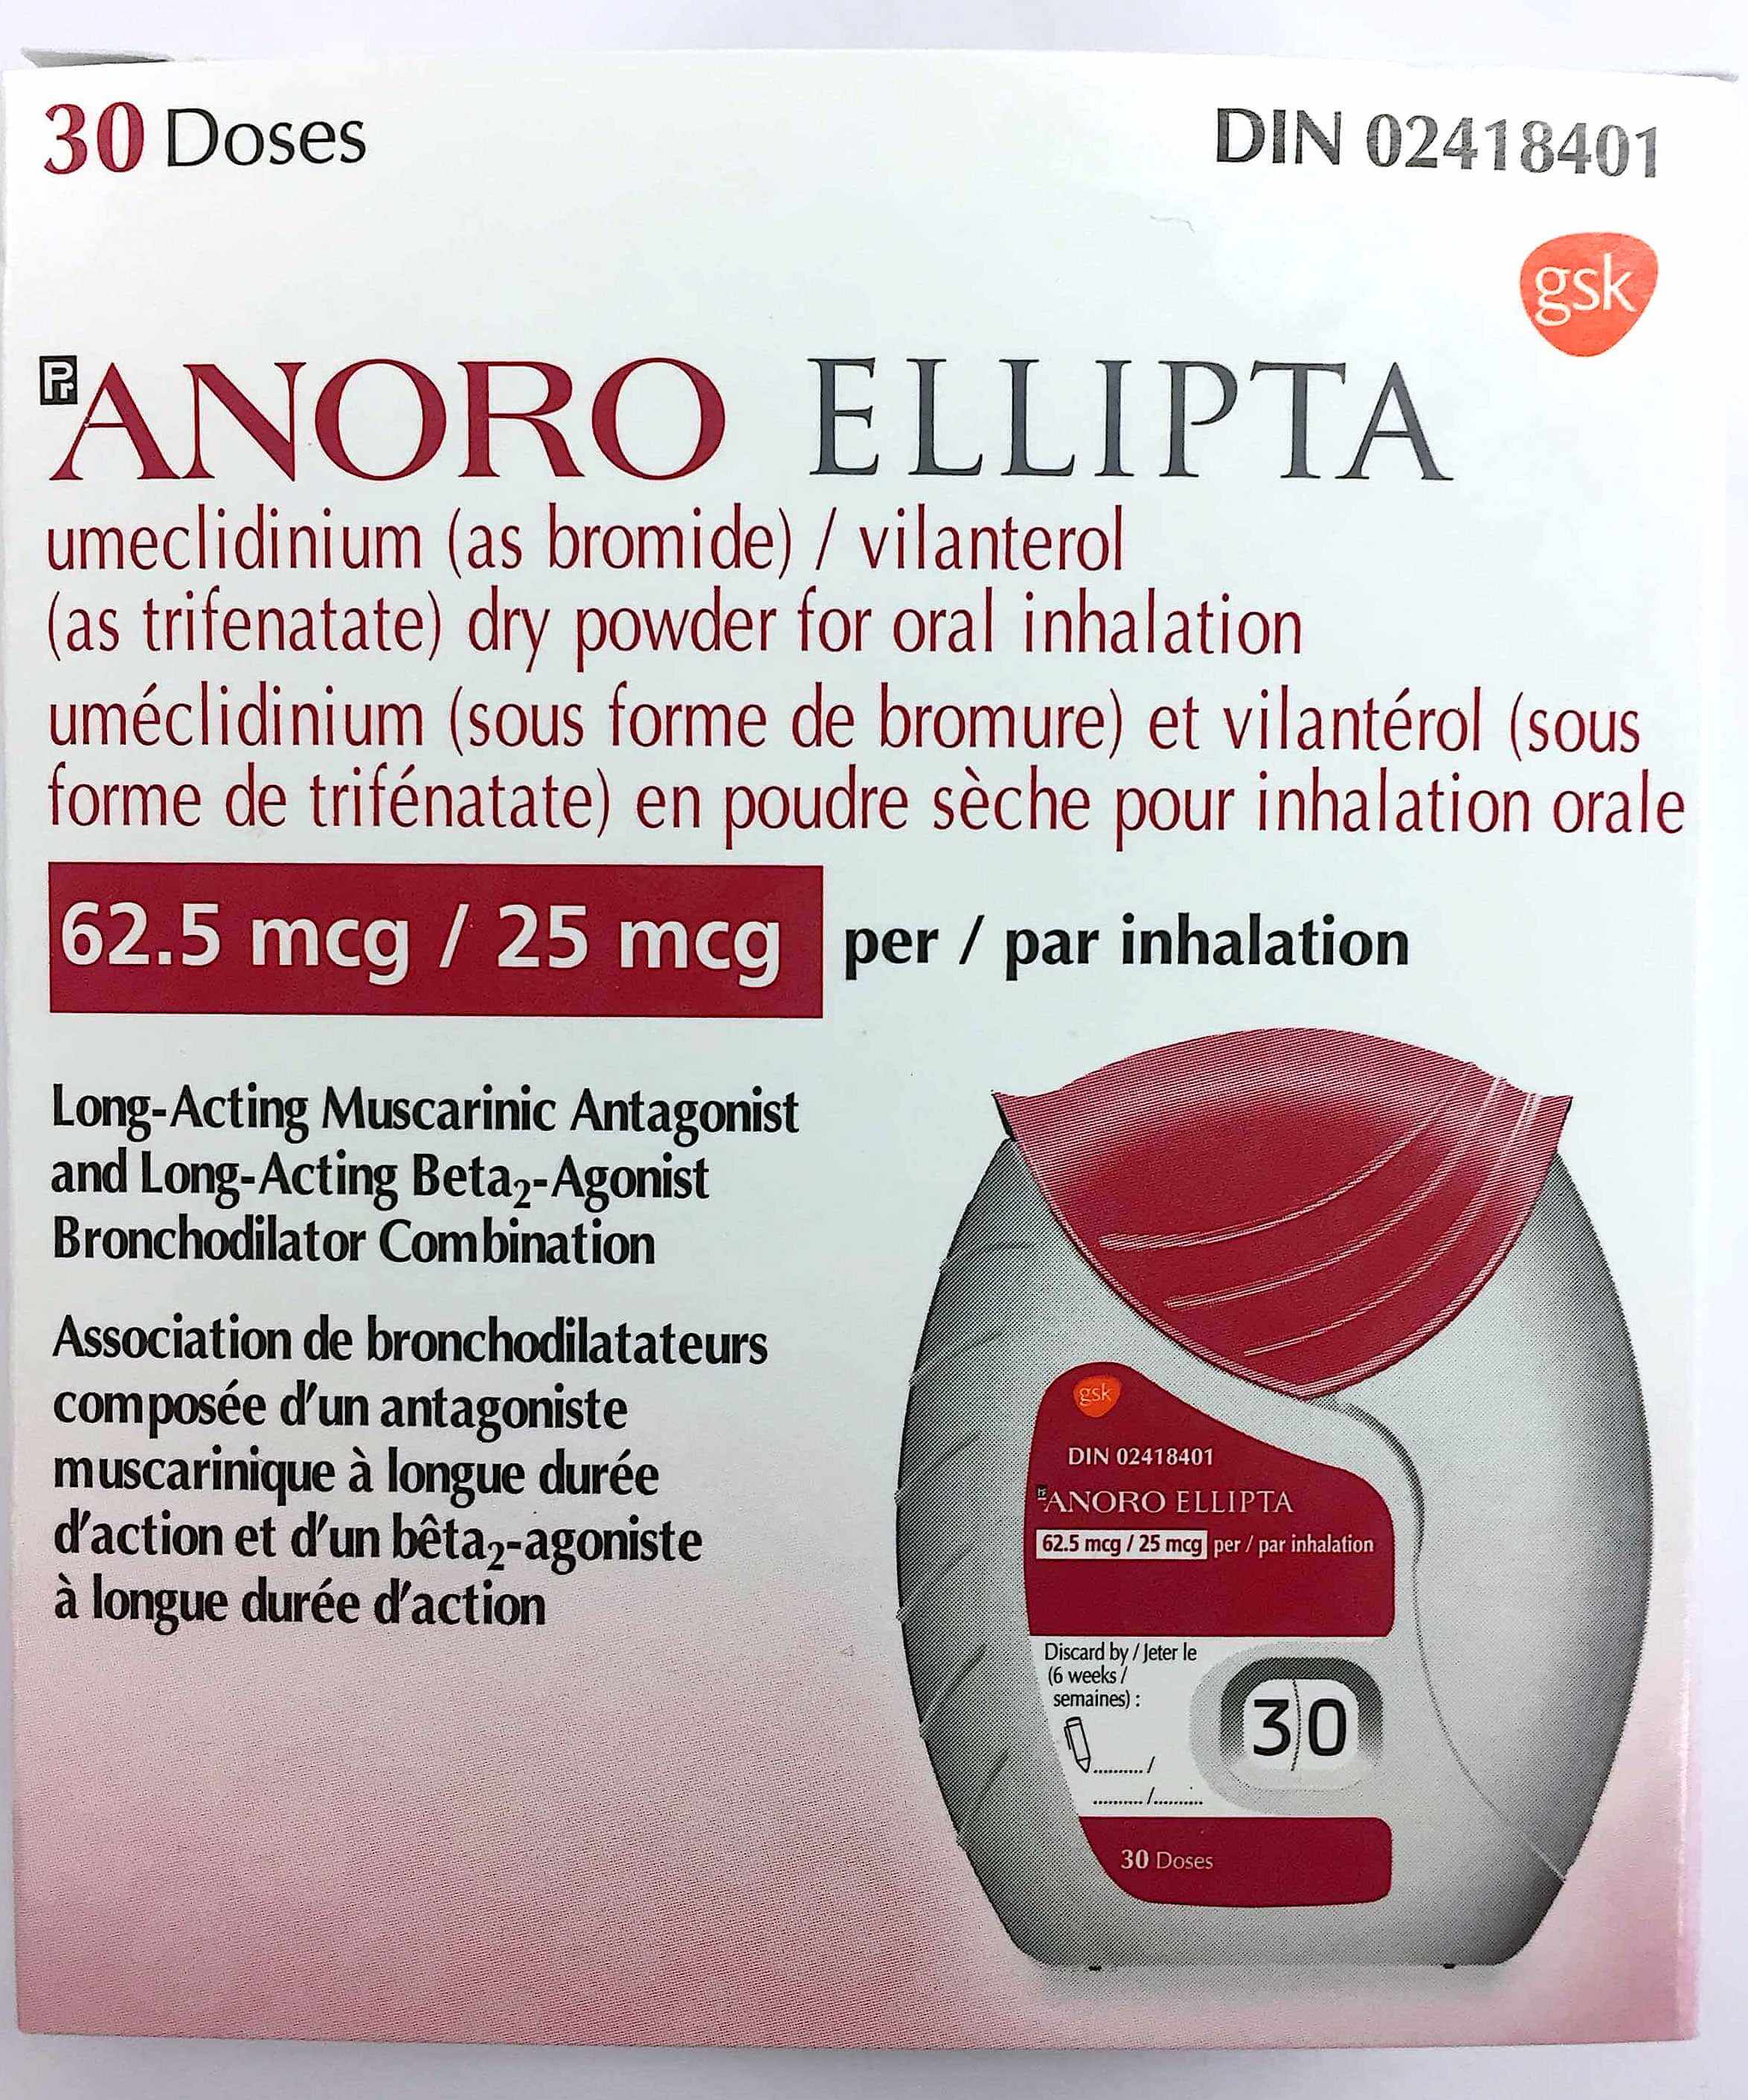 buy-canadian-pharmacy-anoro-ellipta-here-pricepro-pharmacy